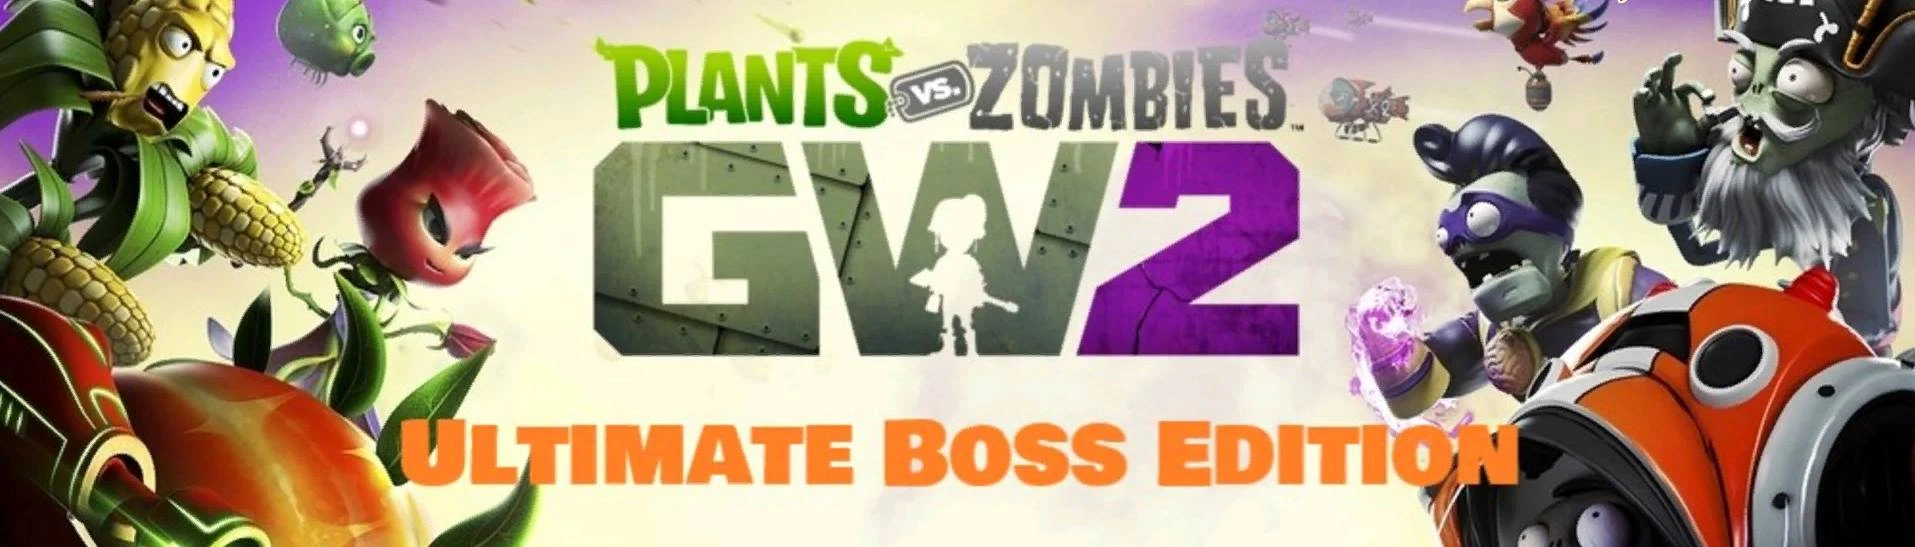 PC / Computer - Plants vs. Zombies: Garden Warfare 2 - Imitator